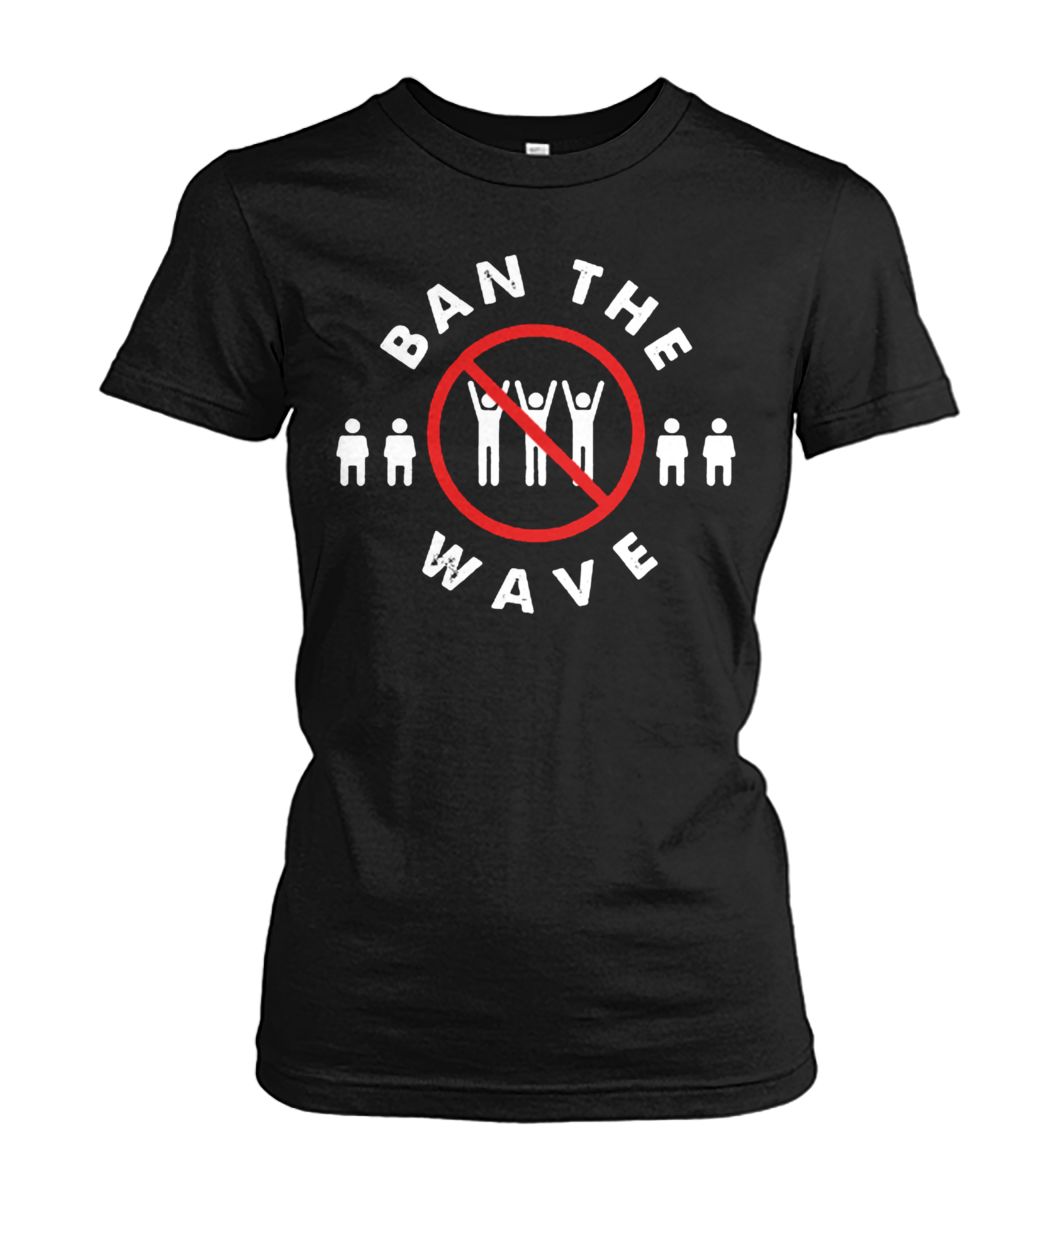 Ban the wave women's crew tee